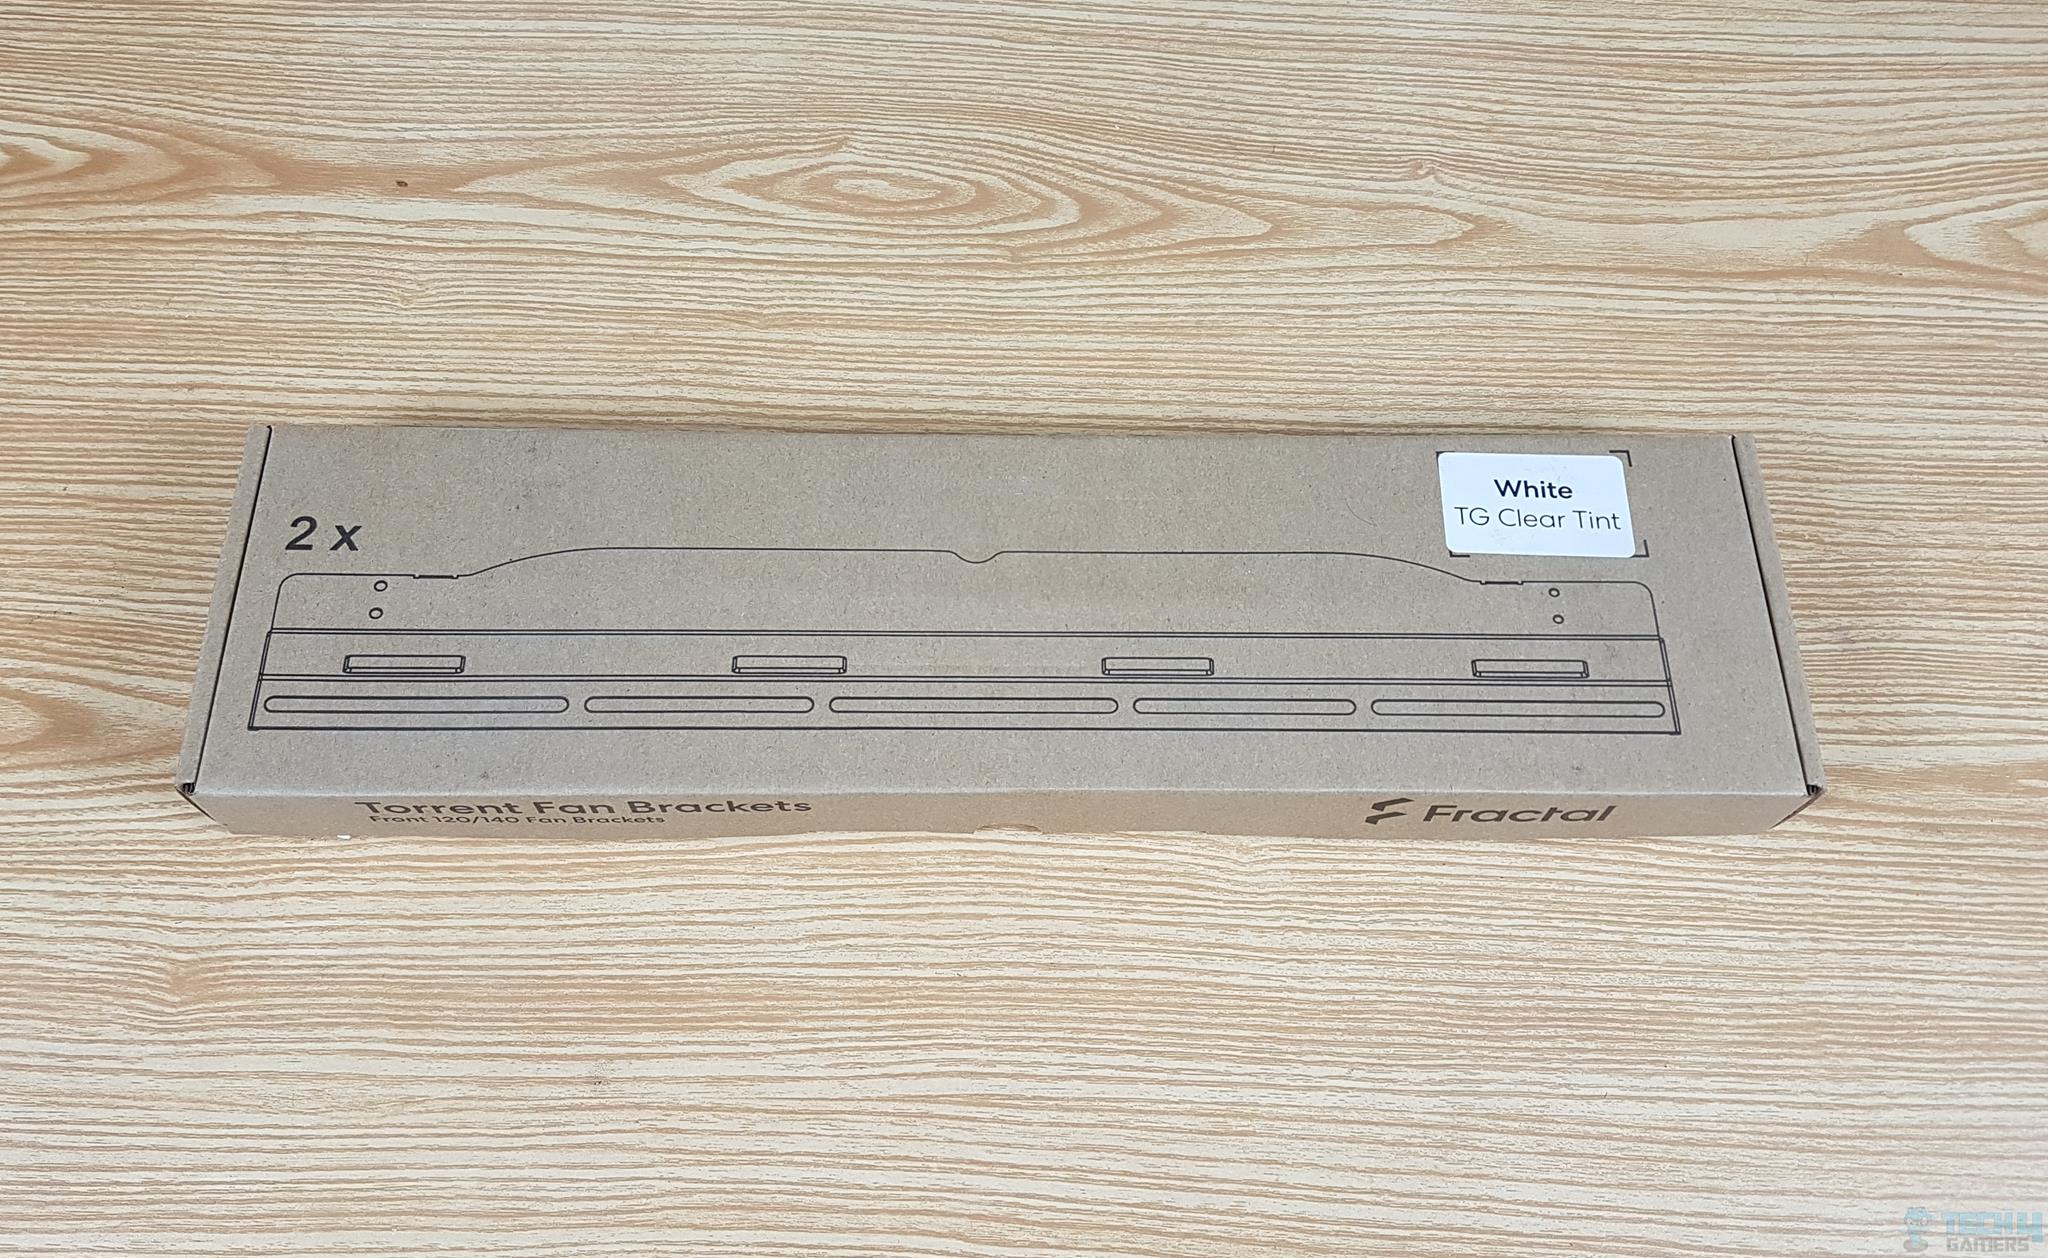 Fractal Design Torrent White TG Clear Tint PC Case — Fan Brackets Box